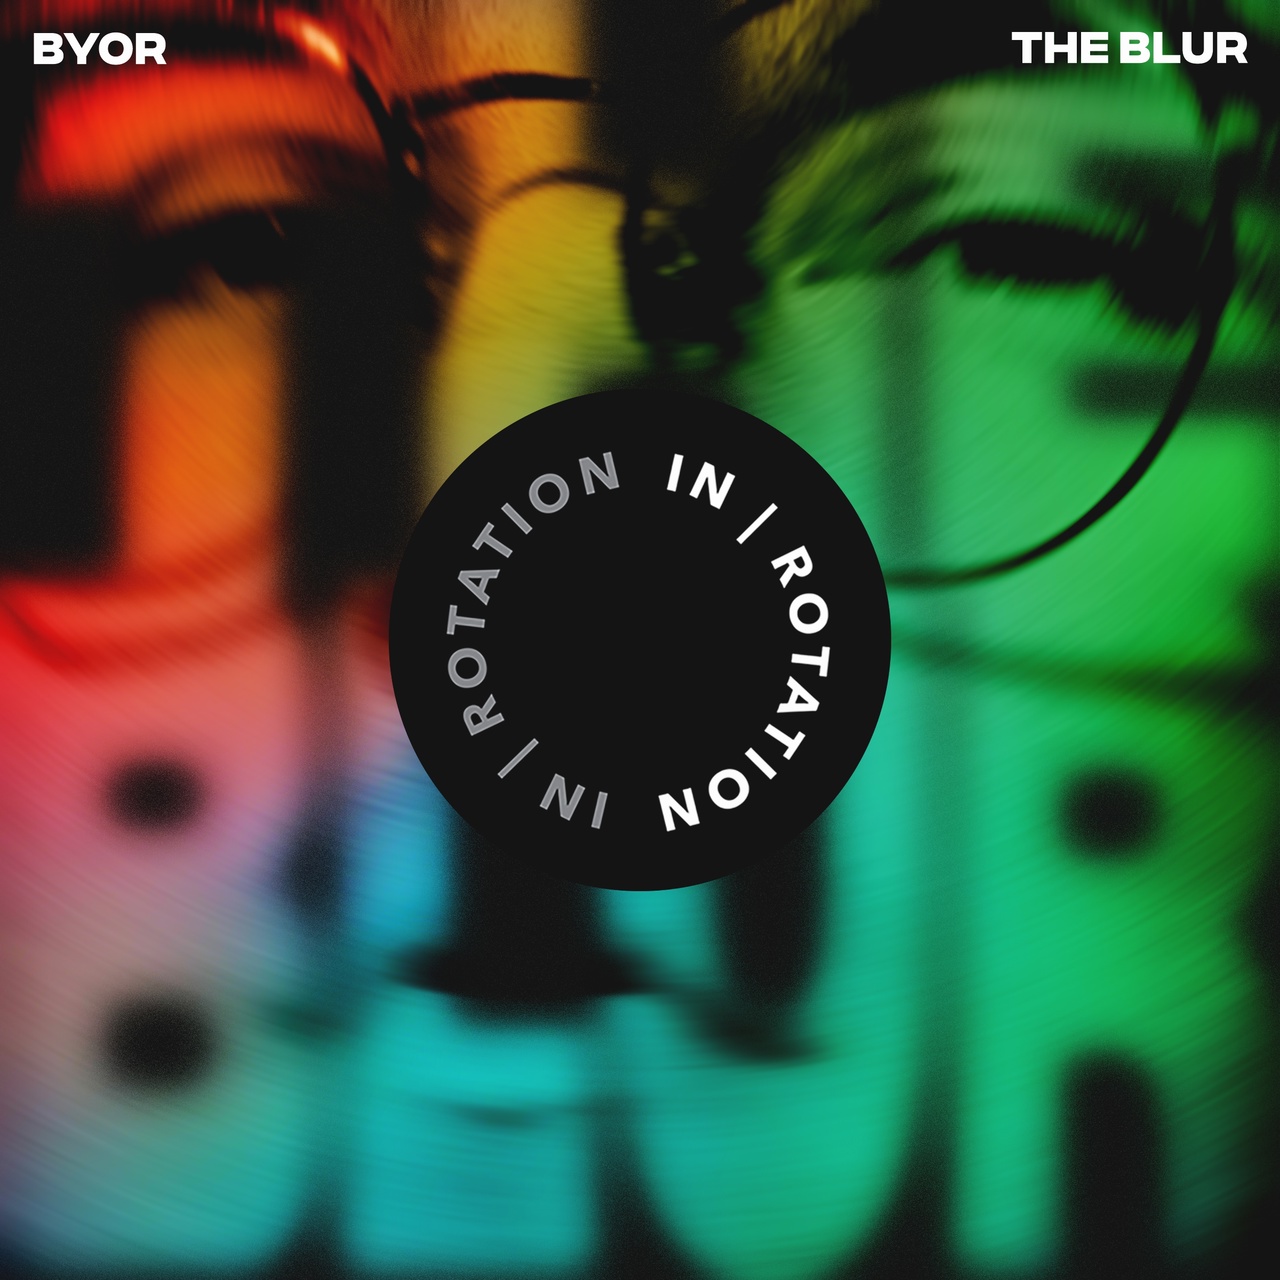 BYOR The Blur cover artwork